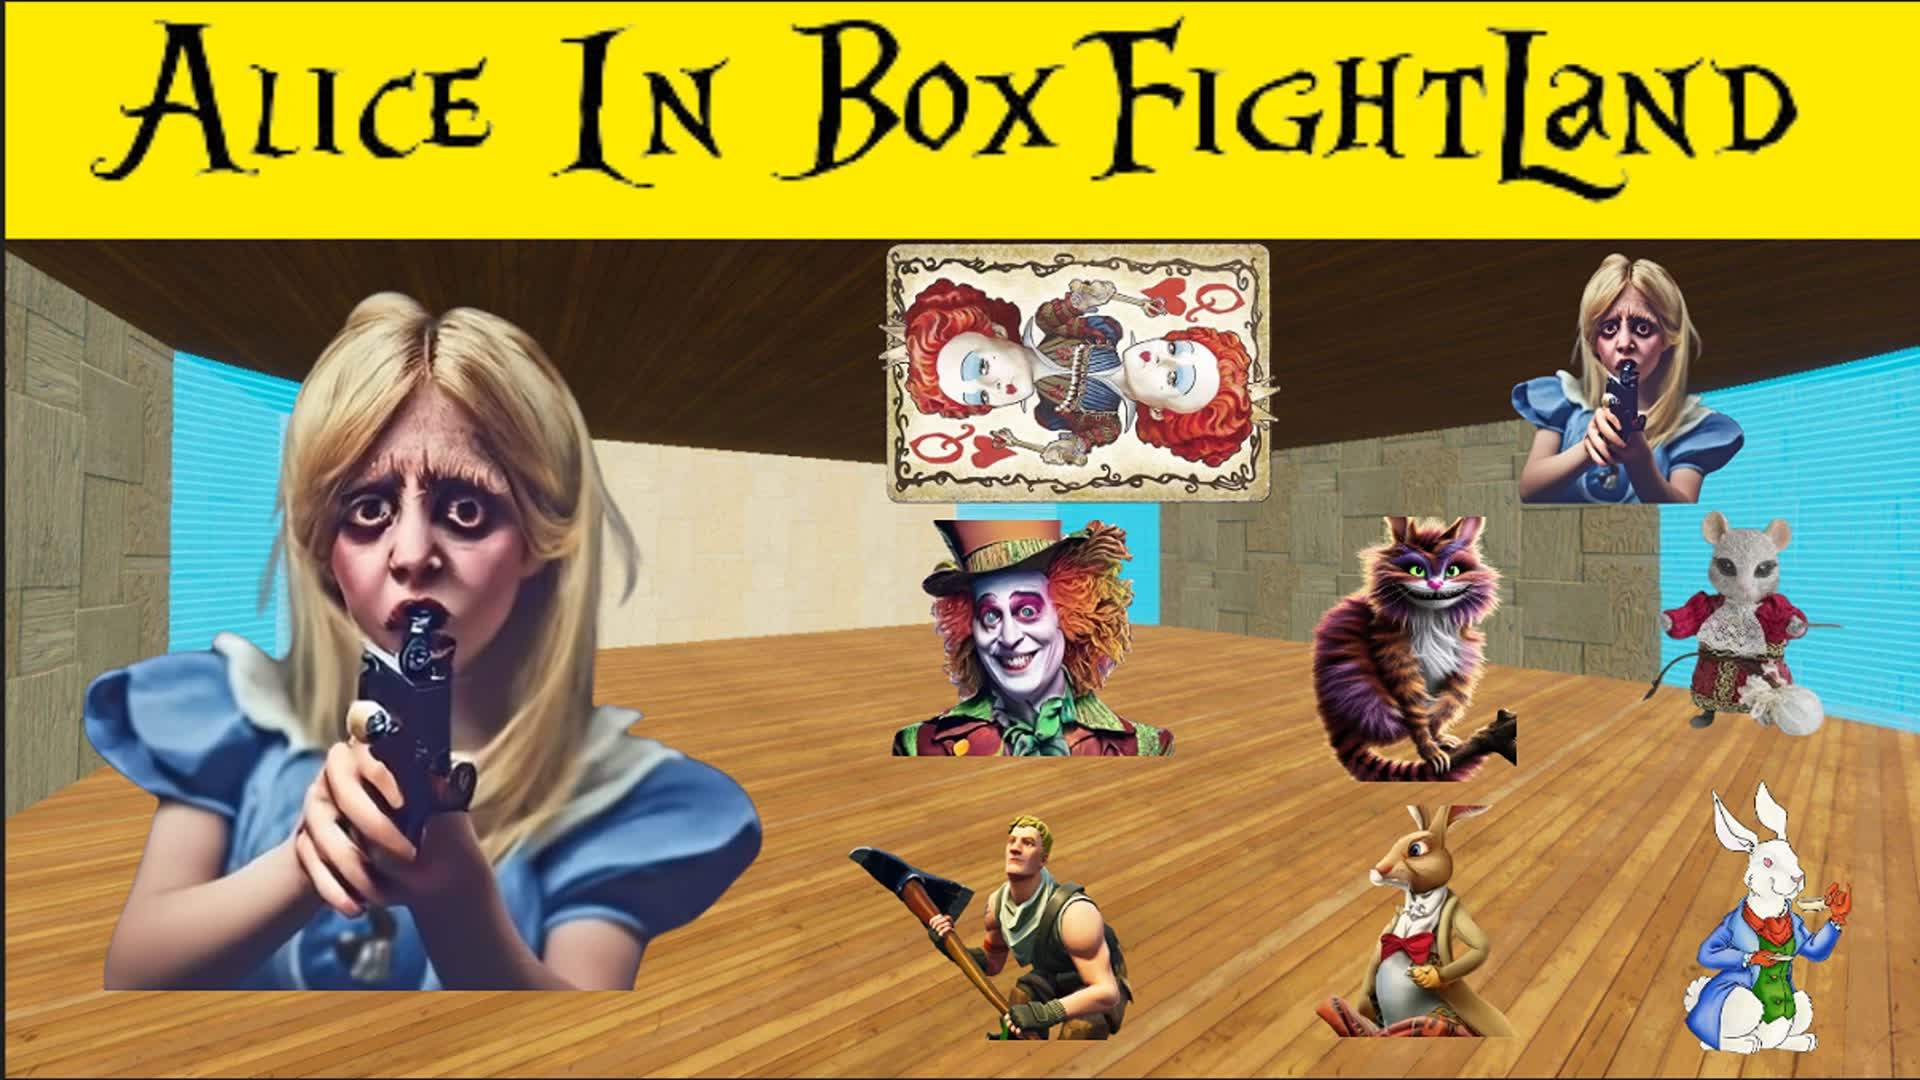 Alice in BoxFightLand